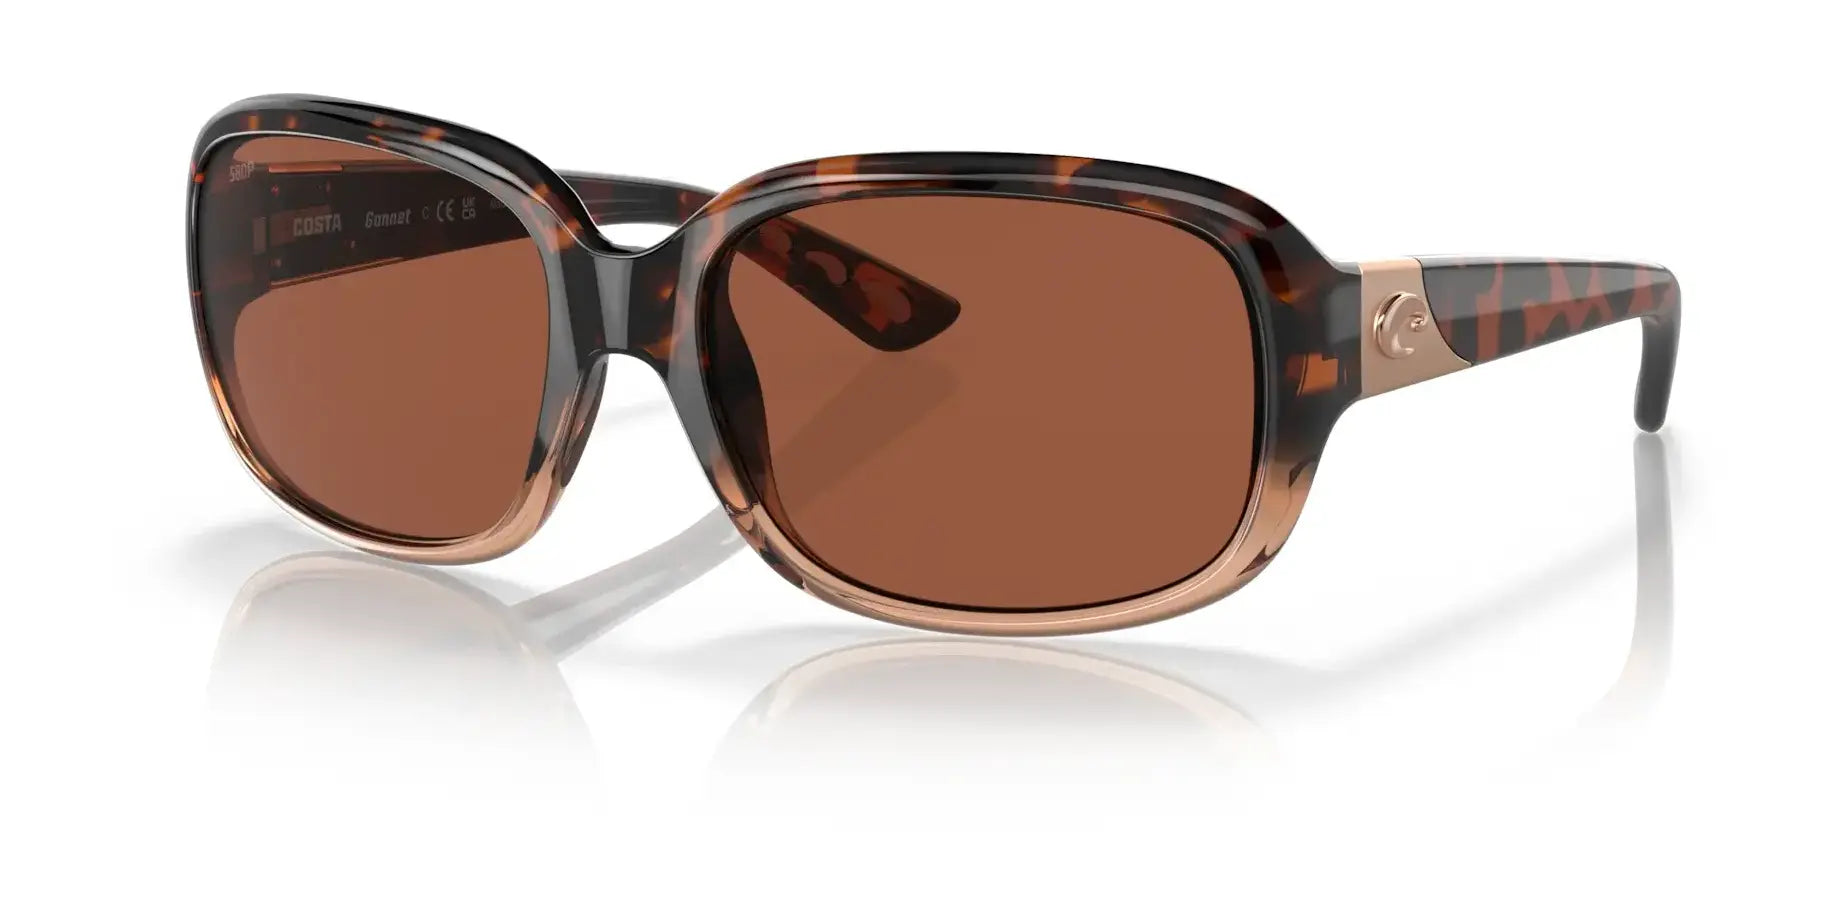 Costa GANNET 6S9041 Sunglasses Shiny Tortoise Fade / Copper